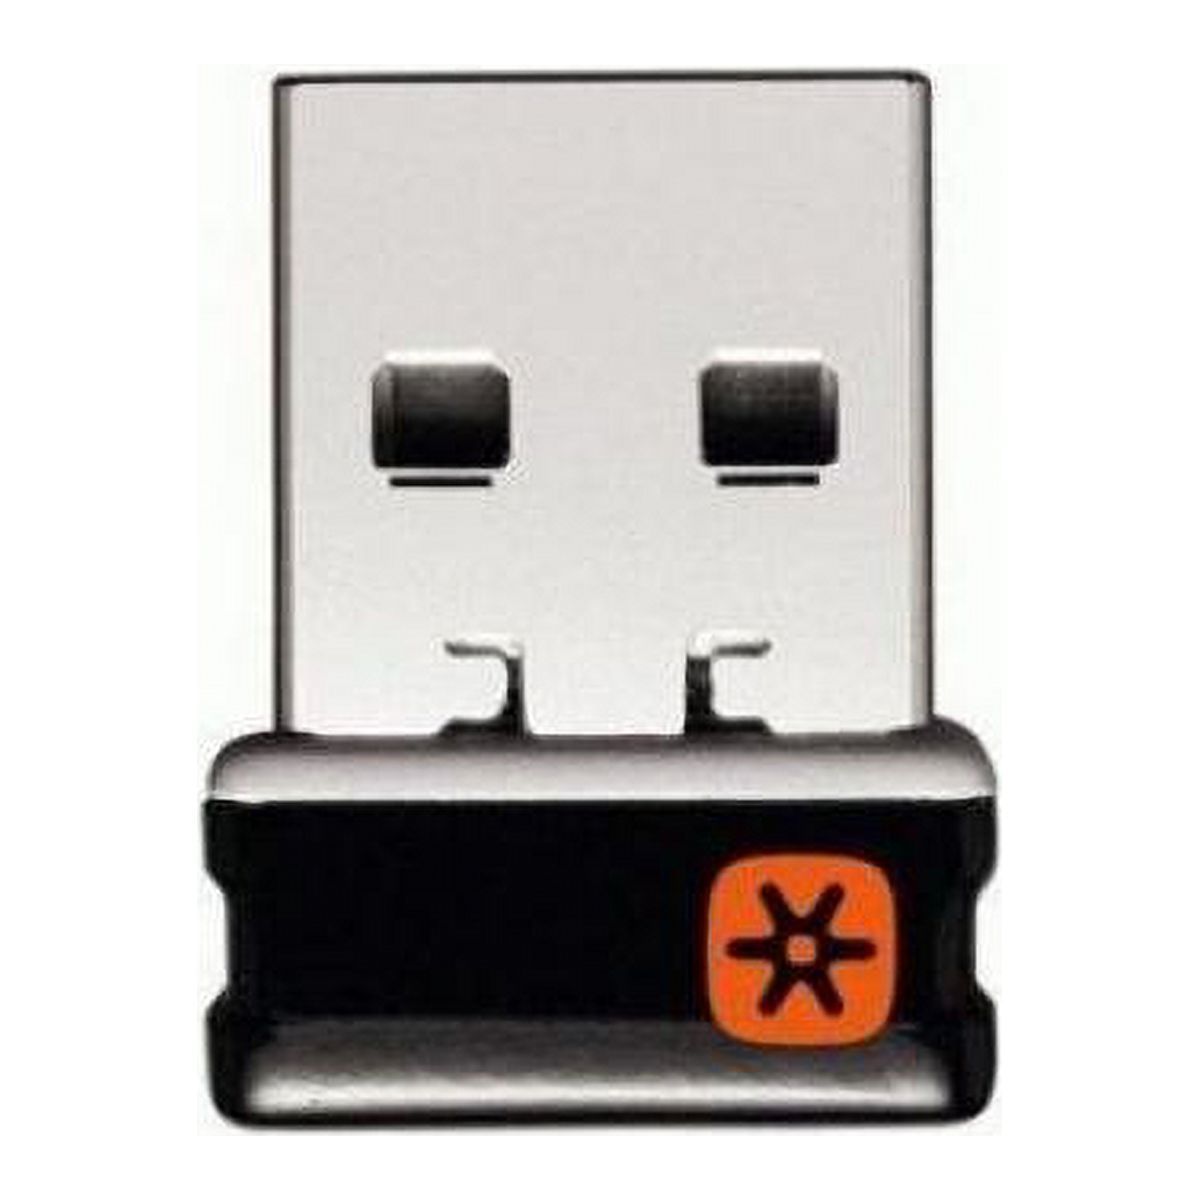 Logitech Unifying USB Receiver [Electronics] - image 2 of 4